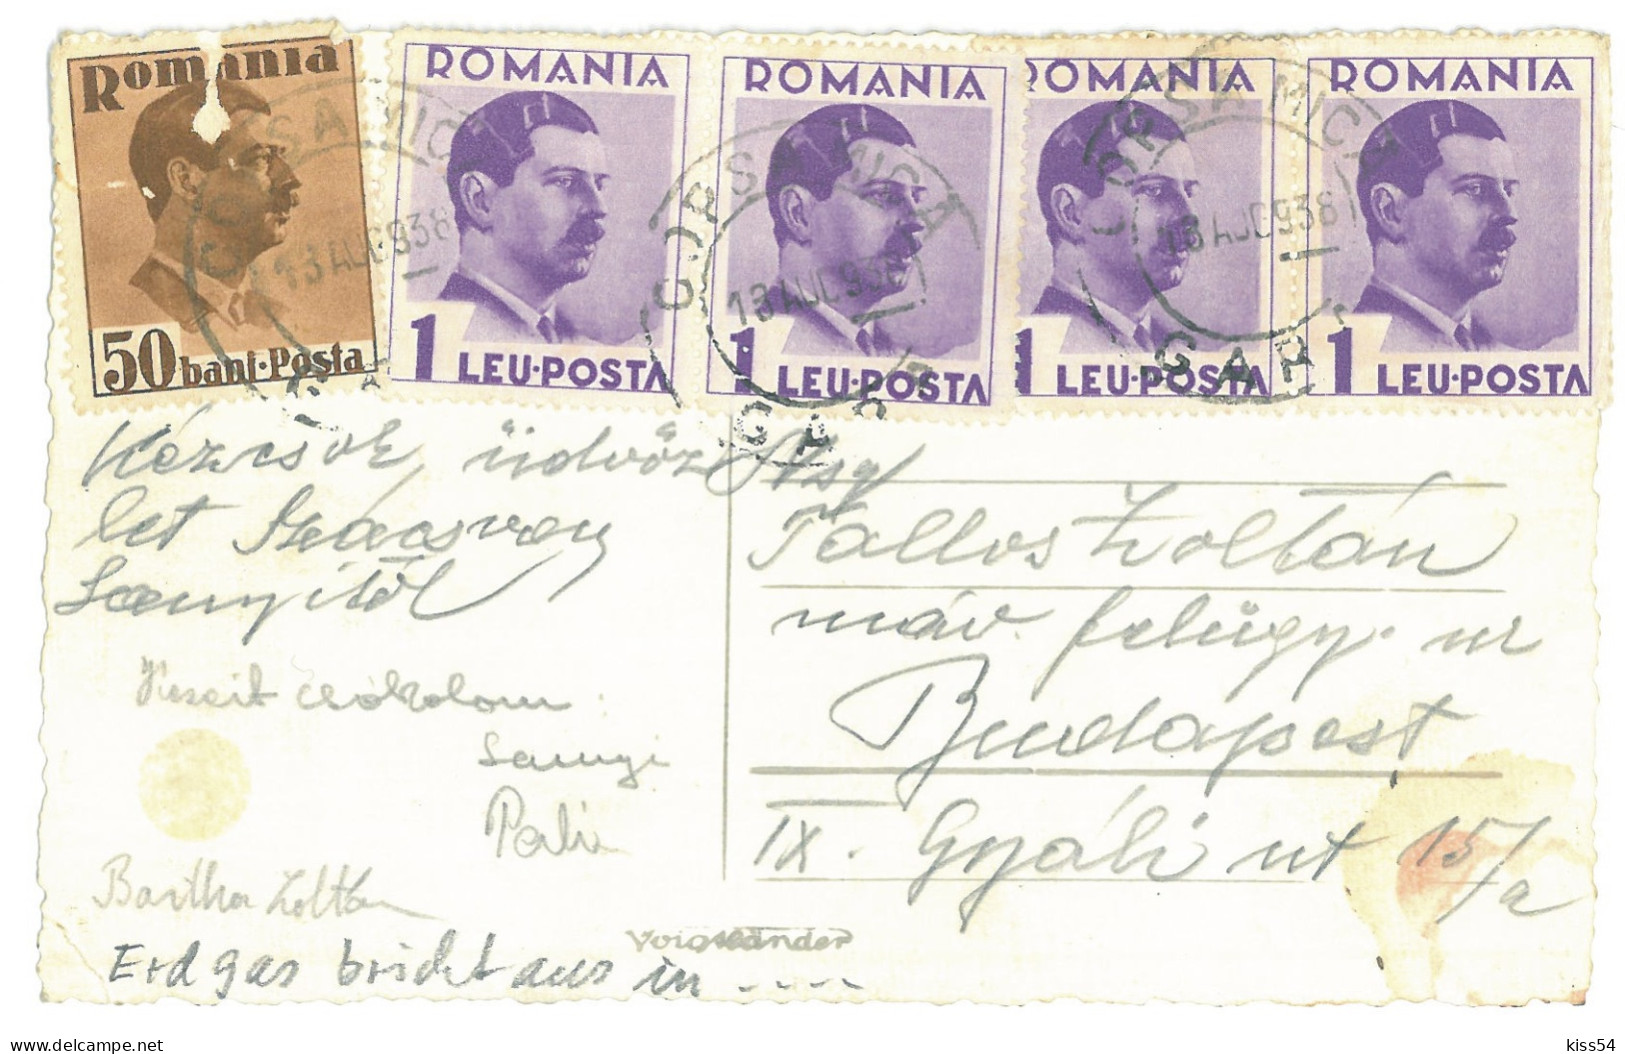 RO 81 - 25032 COPSA-MICA, Sibiu, Arderea Gazului Metan, Romania - Old Postcard, Real Photo - Used - 1938 - Roumanie